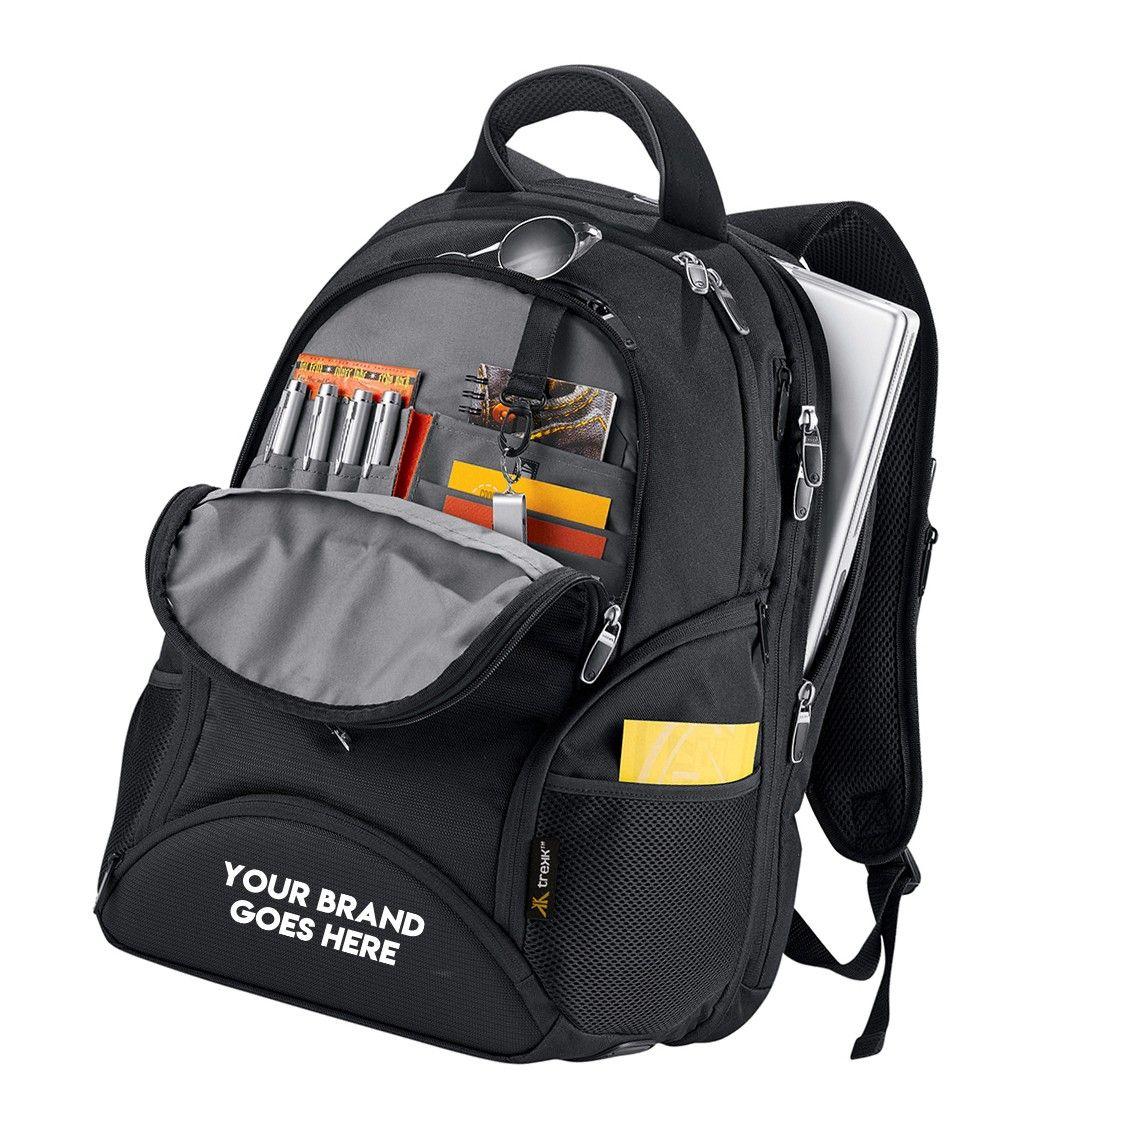 Australian Backpack Logo - Buy High Quality Outdoor Backpacks With Logo Branding